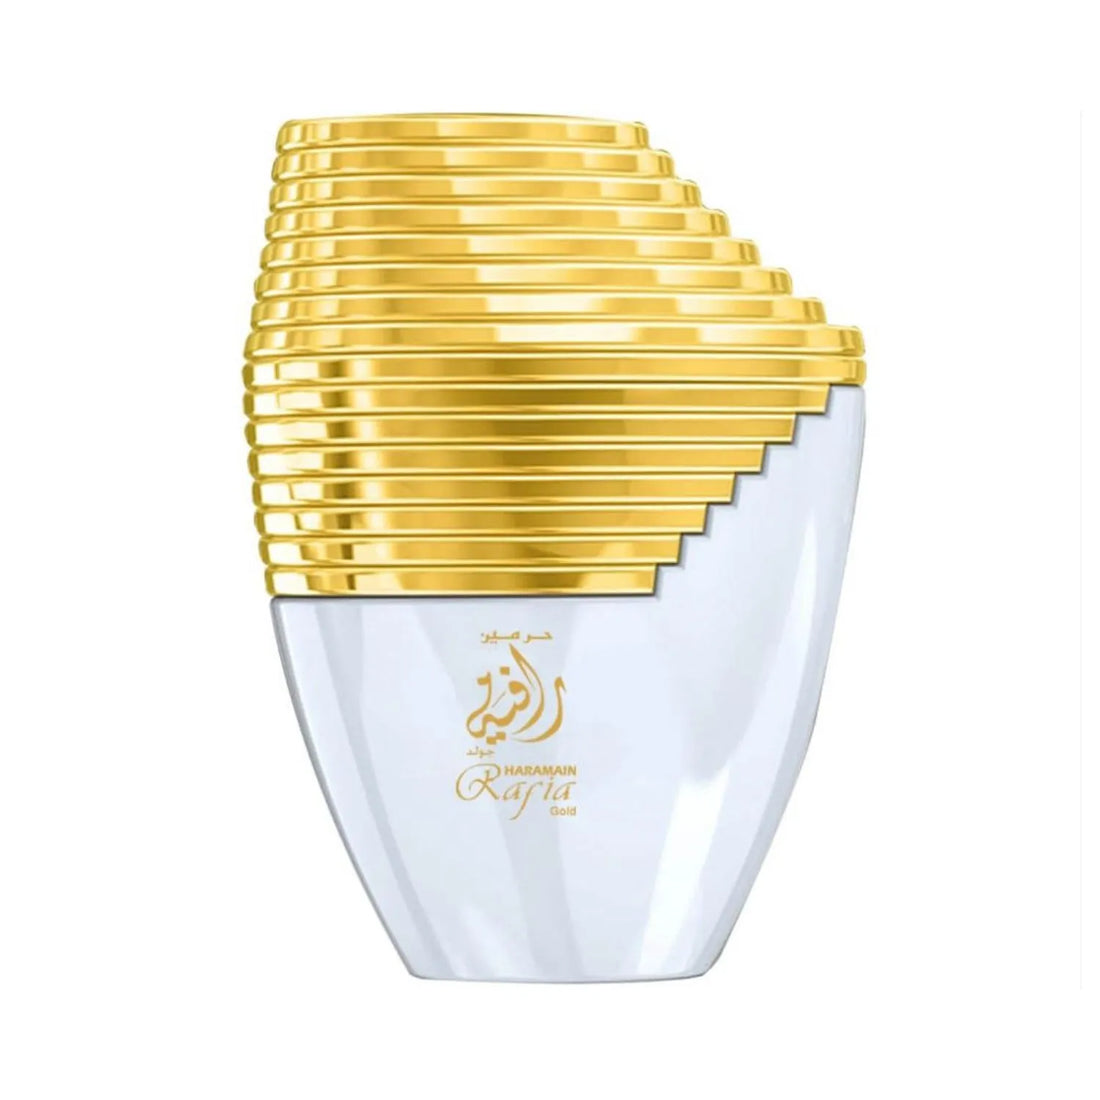 Rafia Gold Perfume EDP Spray Bottle